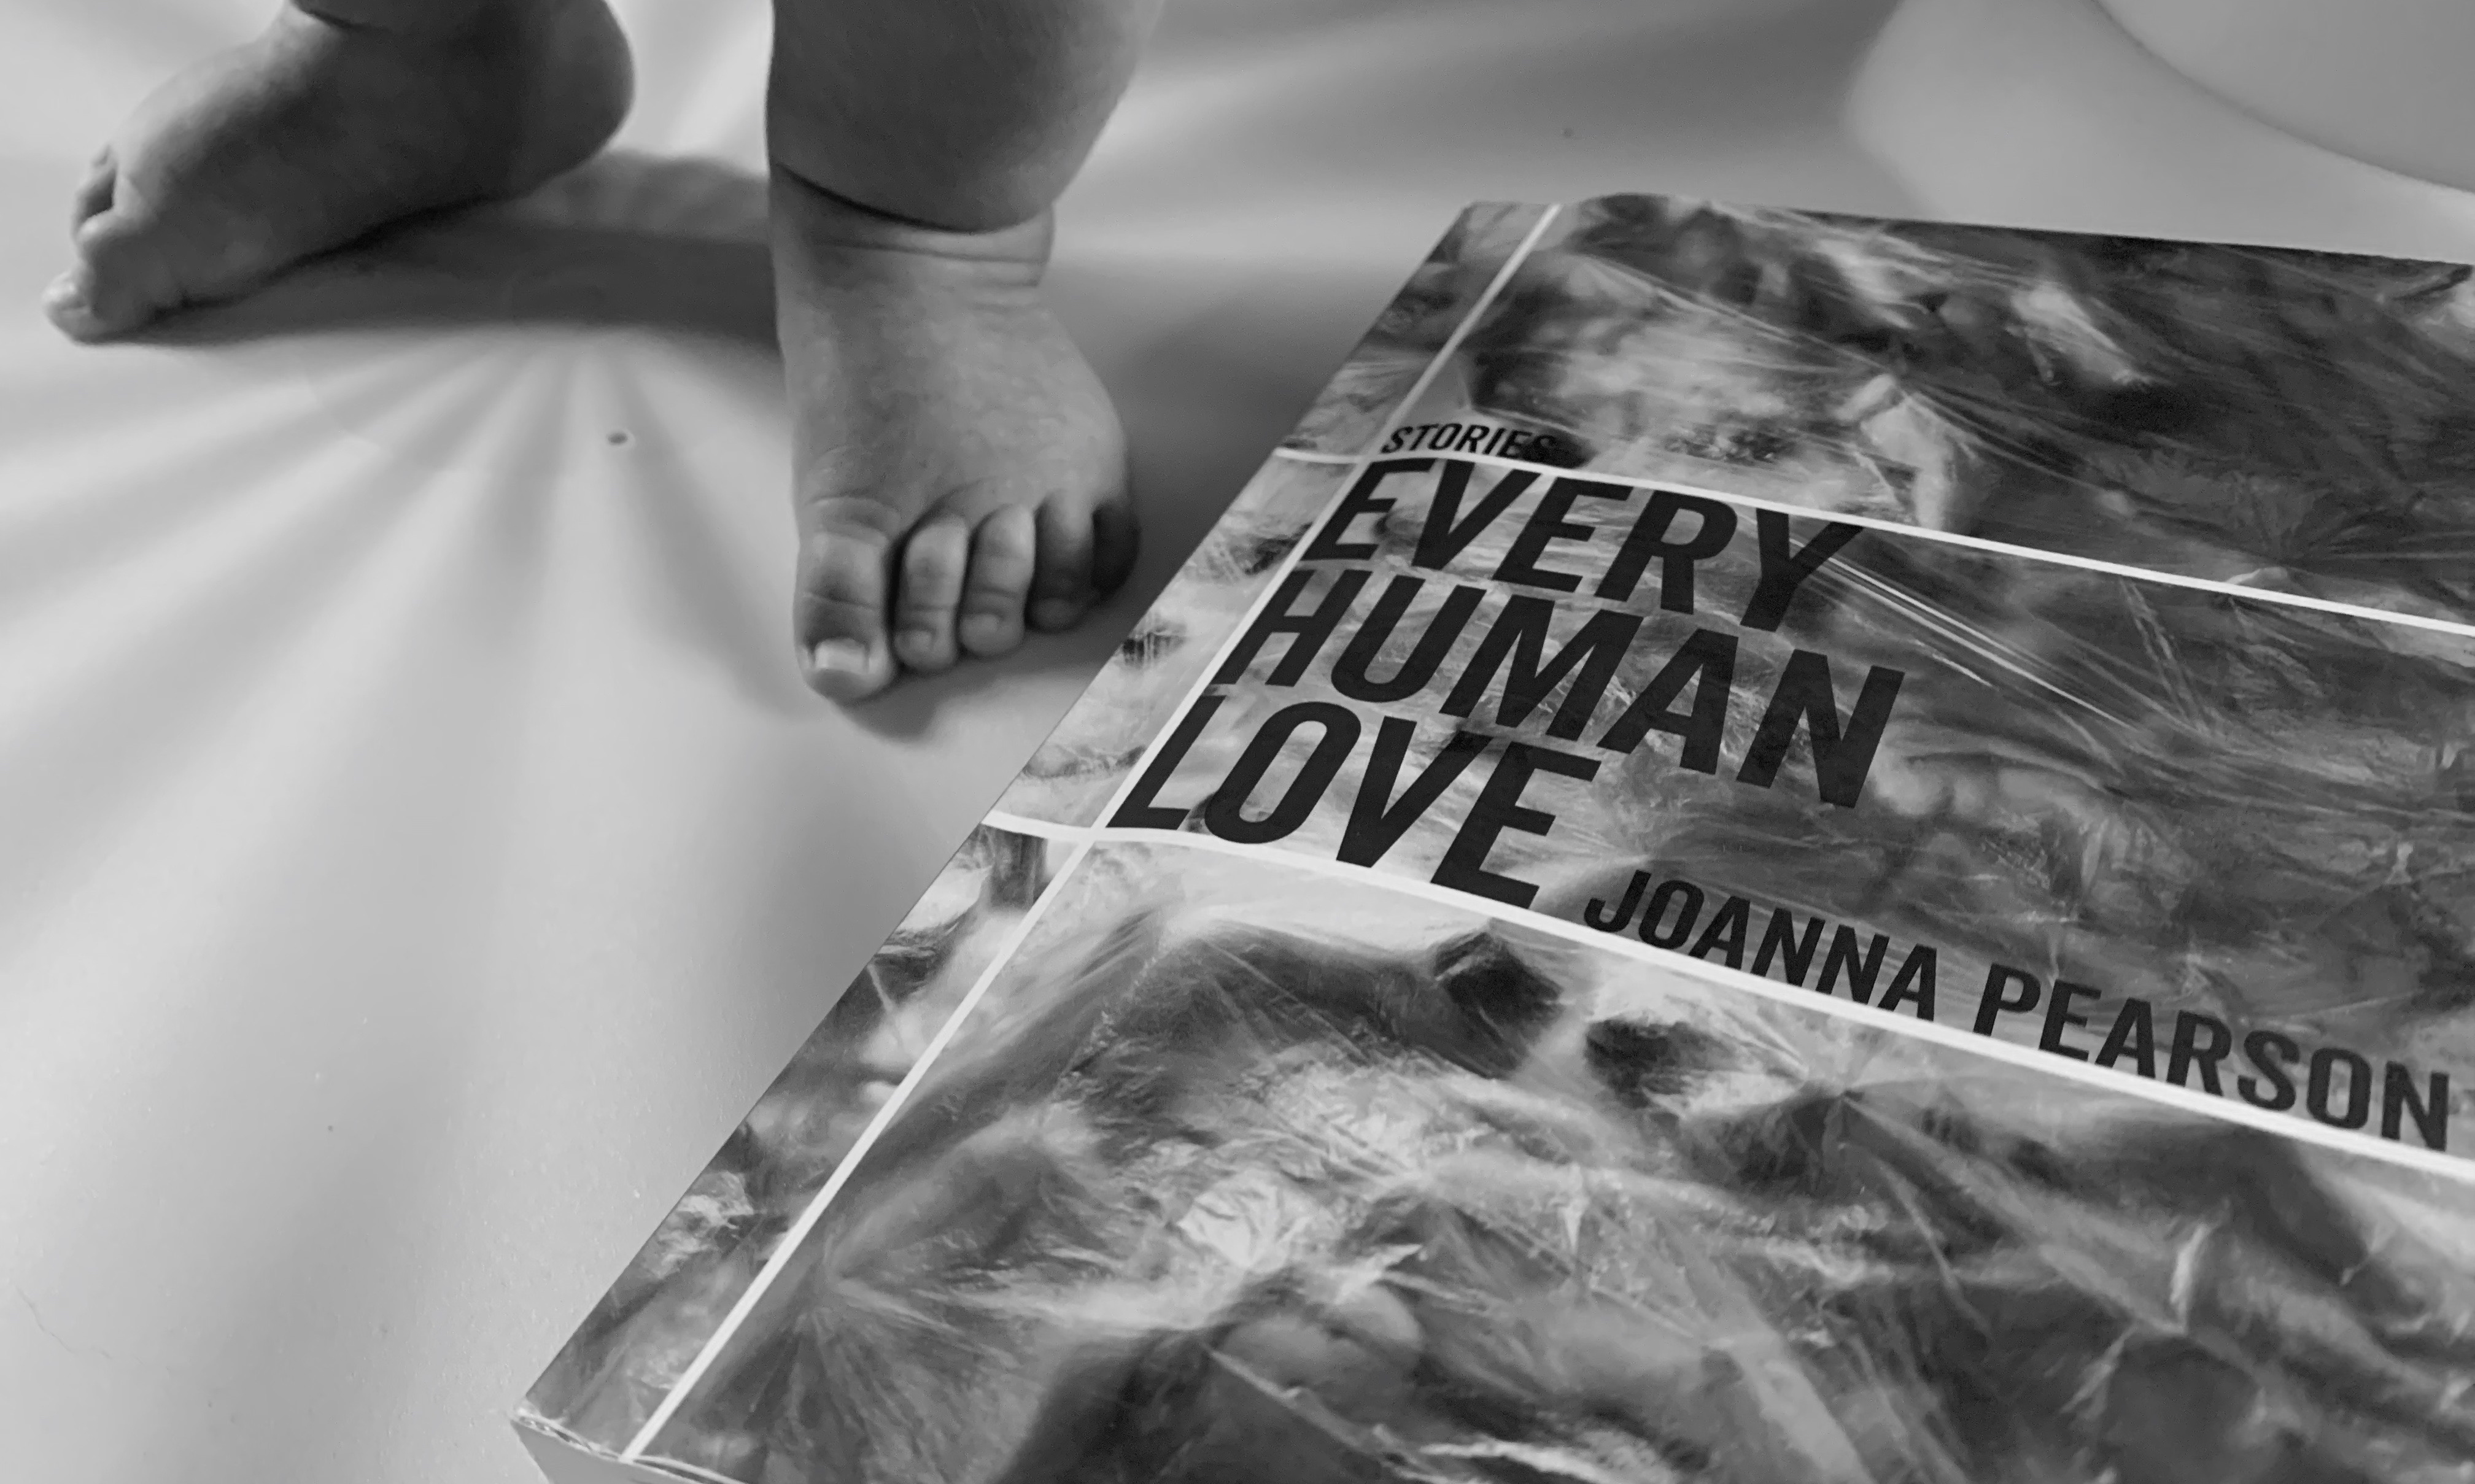 Every Human Love by Joanna Pearson